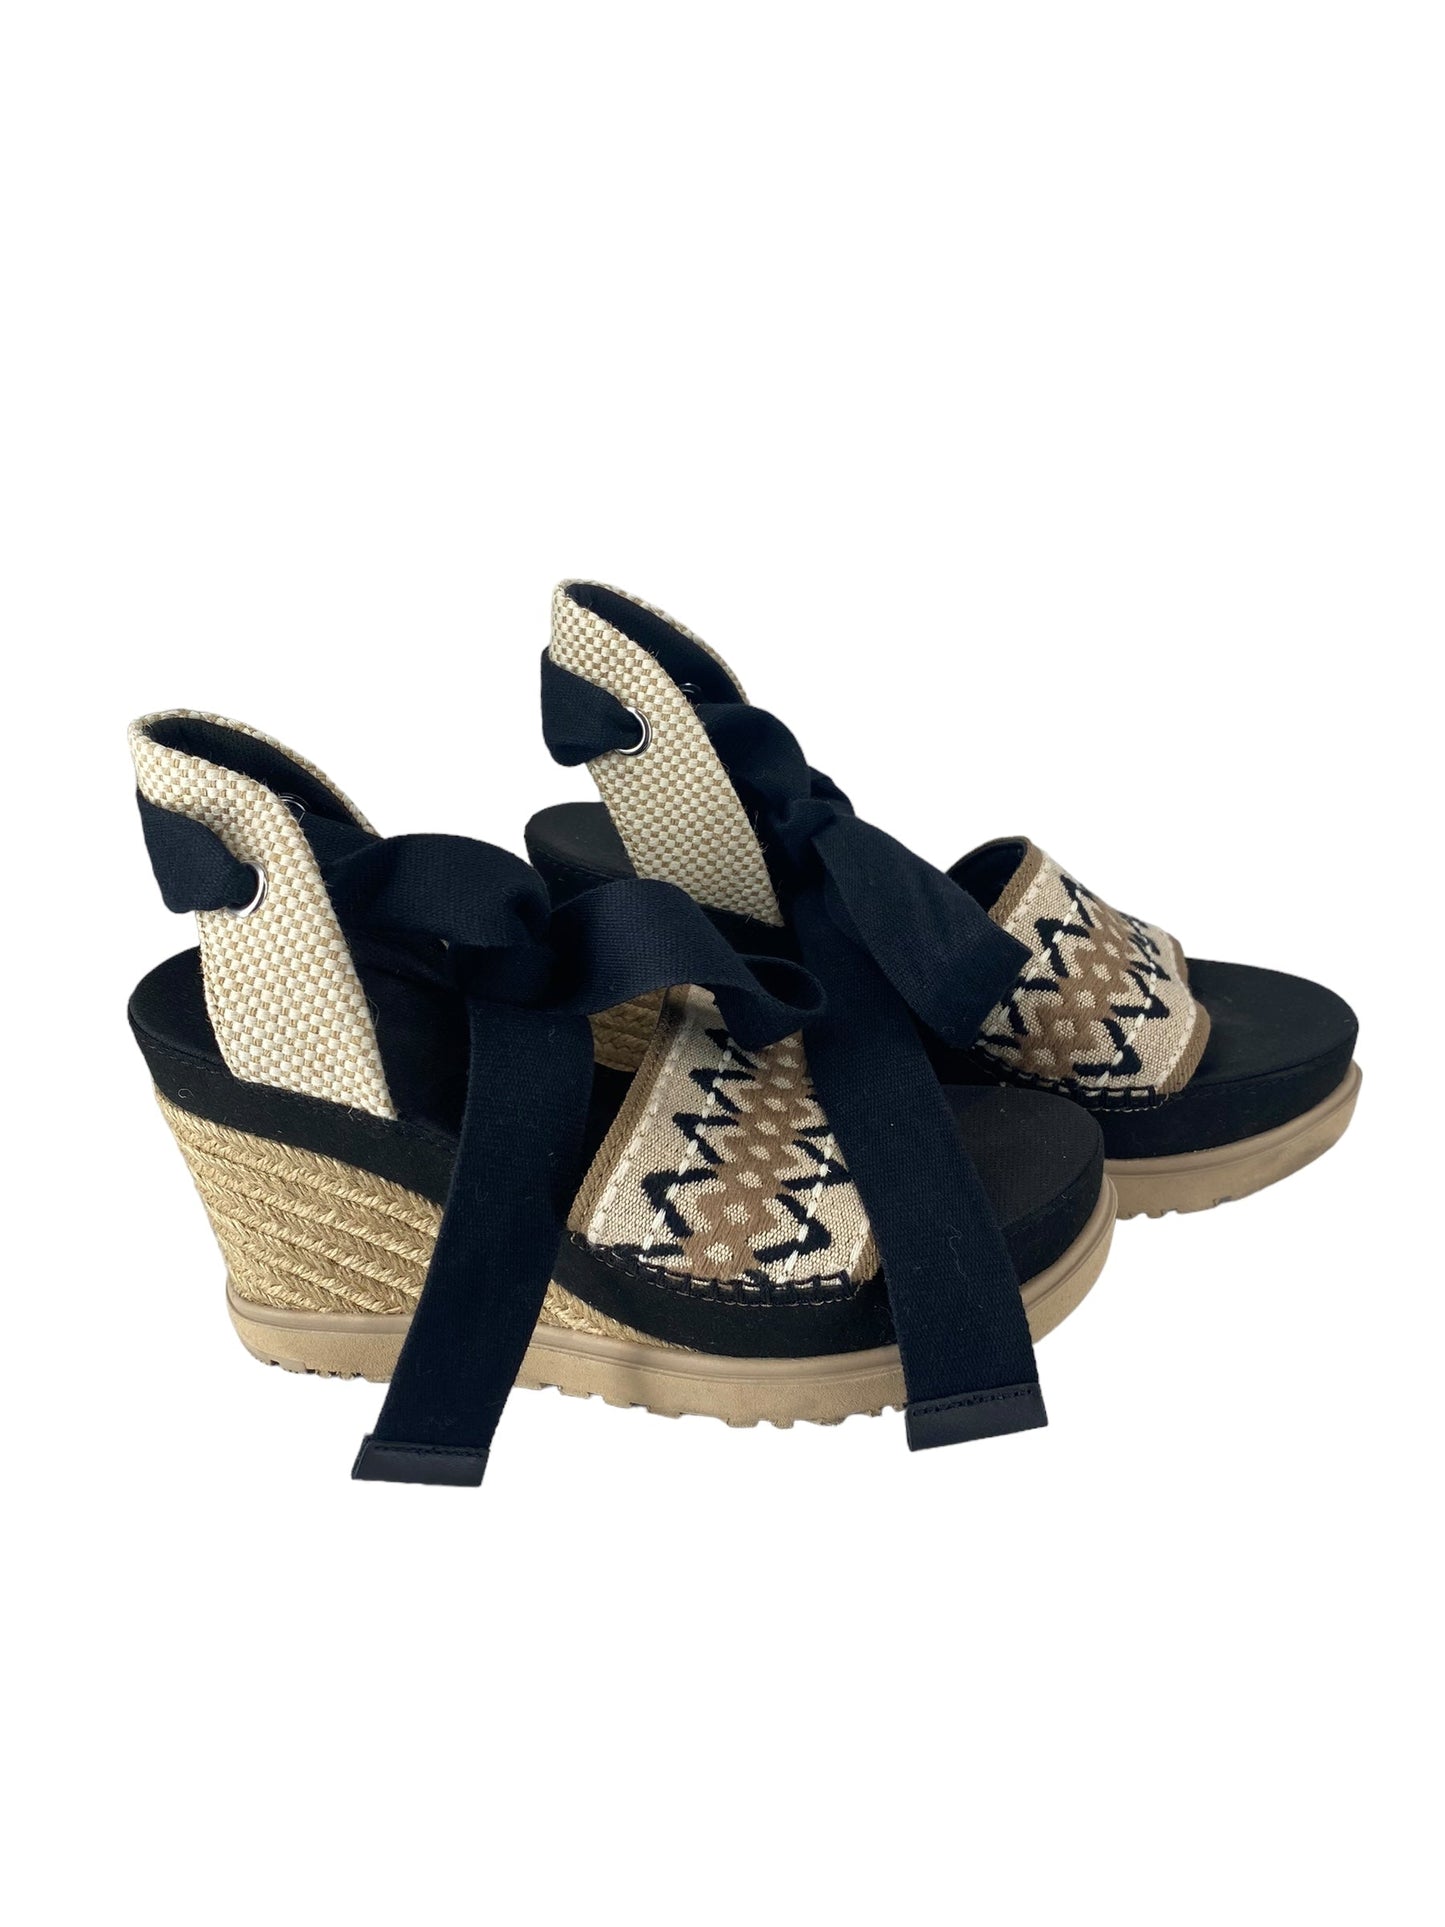 Black & Brown Shoes Heels Wedge Ugg, Size 8